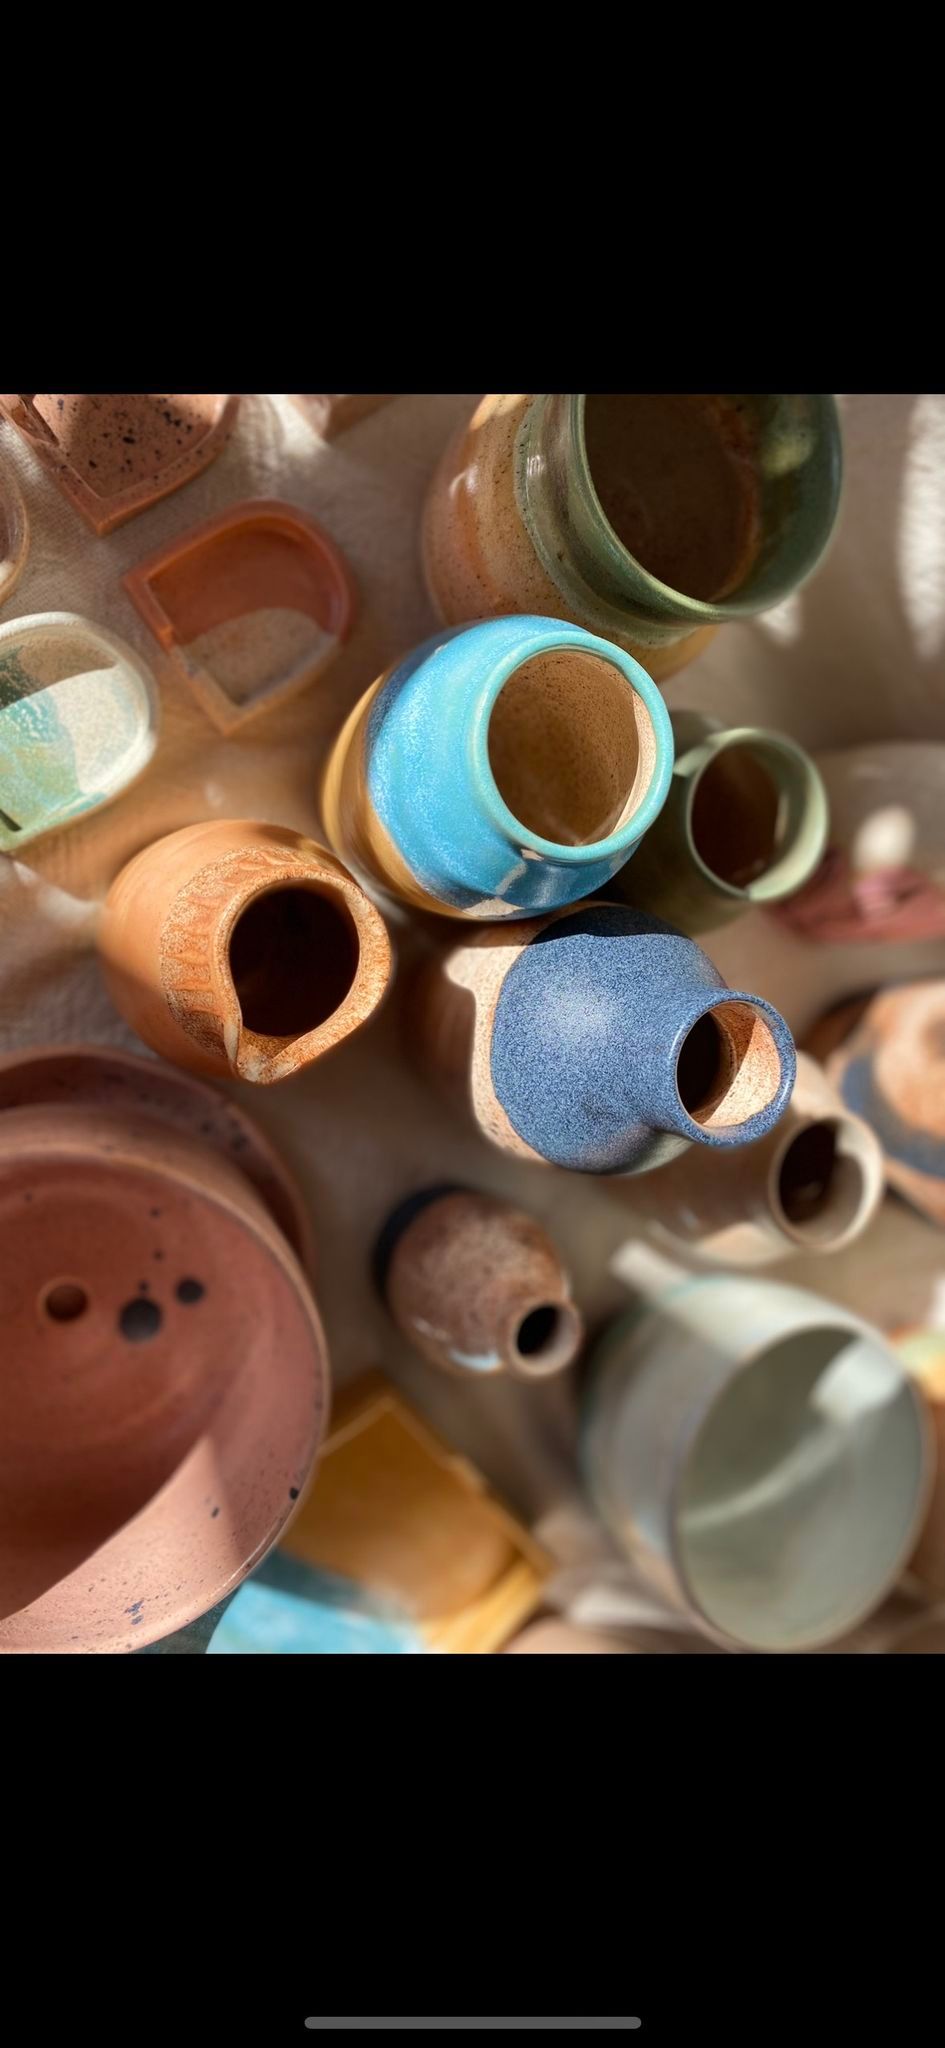 Ceramics Workshop - Make and Decorate your own Ceramic Vase